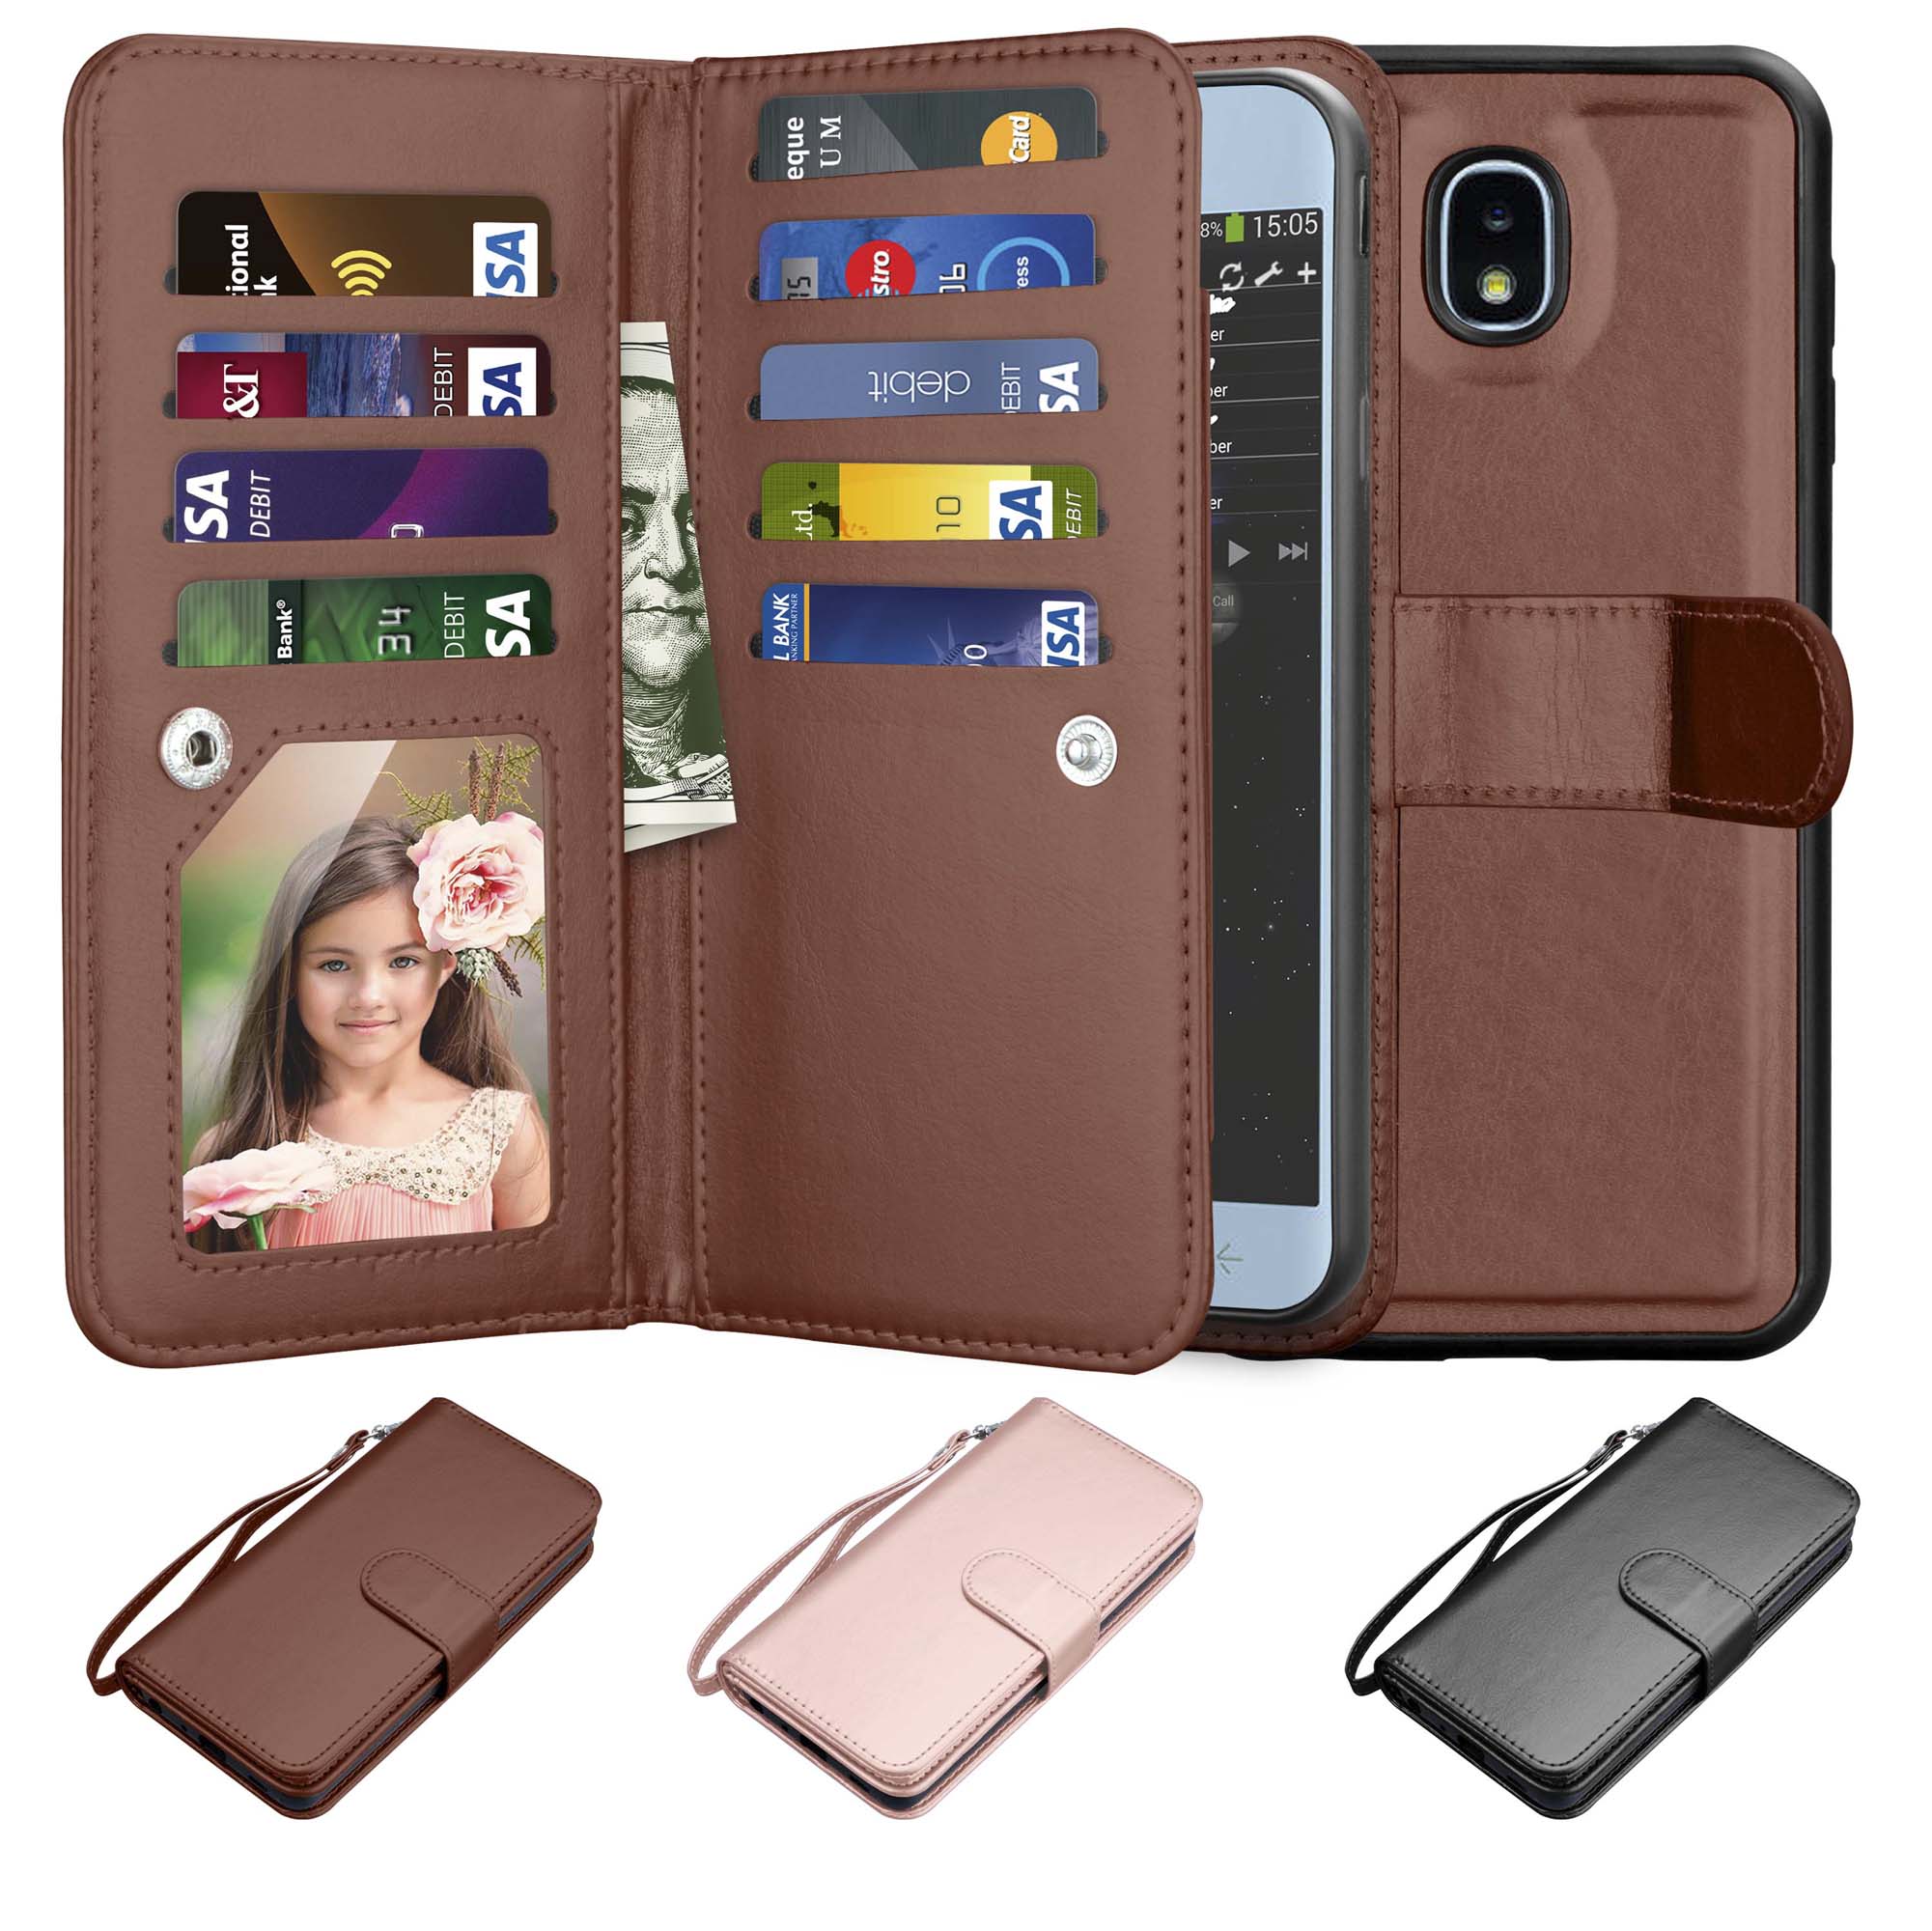 Njjex Wallet Case For 5.5" Samsung Galaxy J7 2018 / J7 V 2nd Gen / J7 Refine / J7 Aero / J7 Eon / J7 Top / J7 Crown / J7 Aura, Wallet Case PU Leather Flip Cover Wrist Strap & Kickstand Brown - image 1 of 5